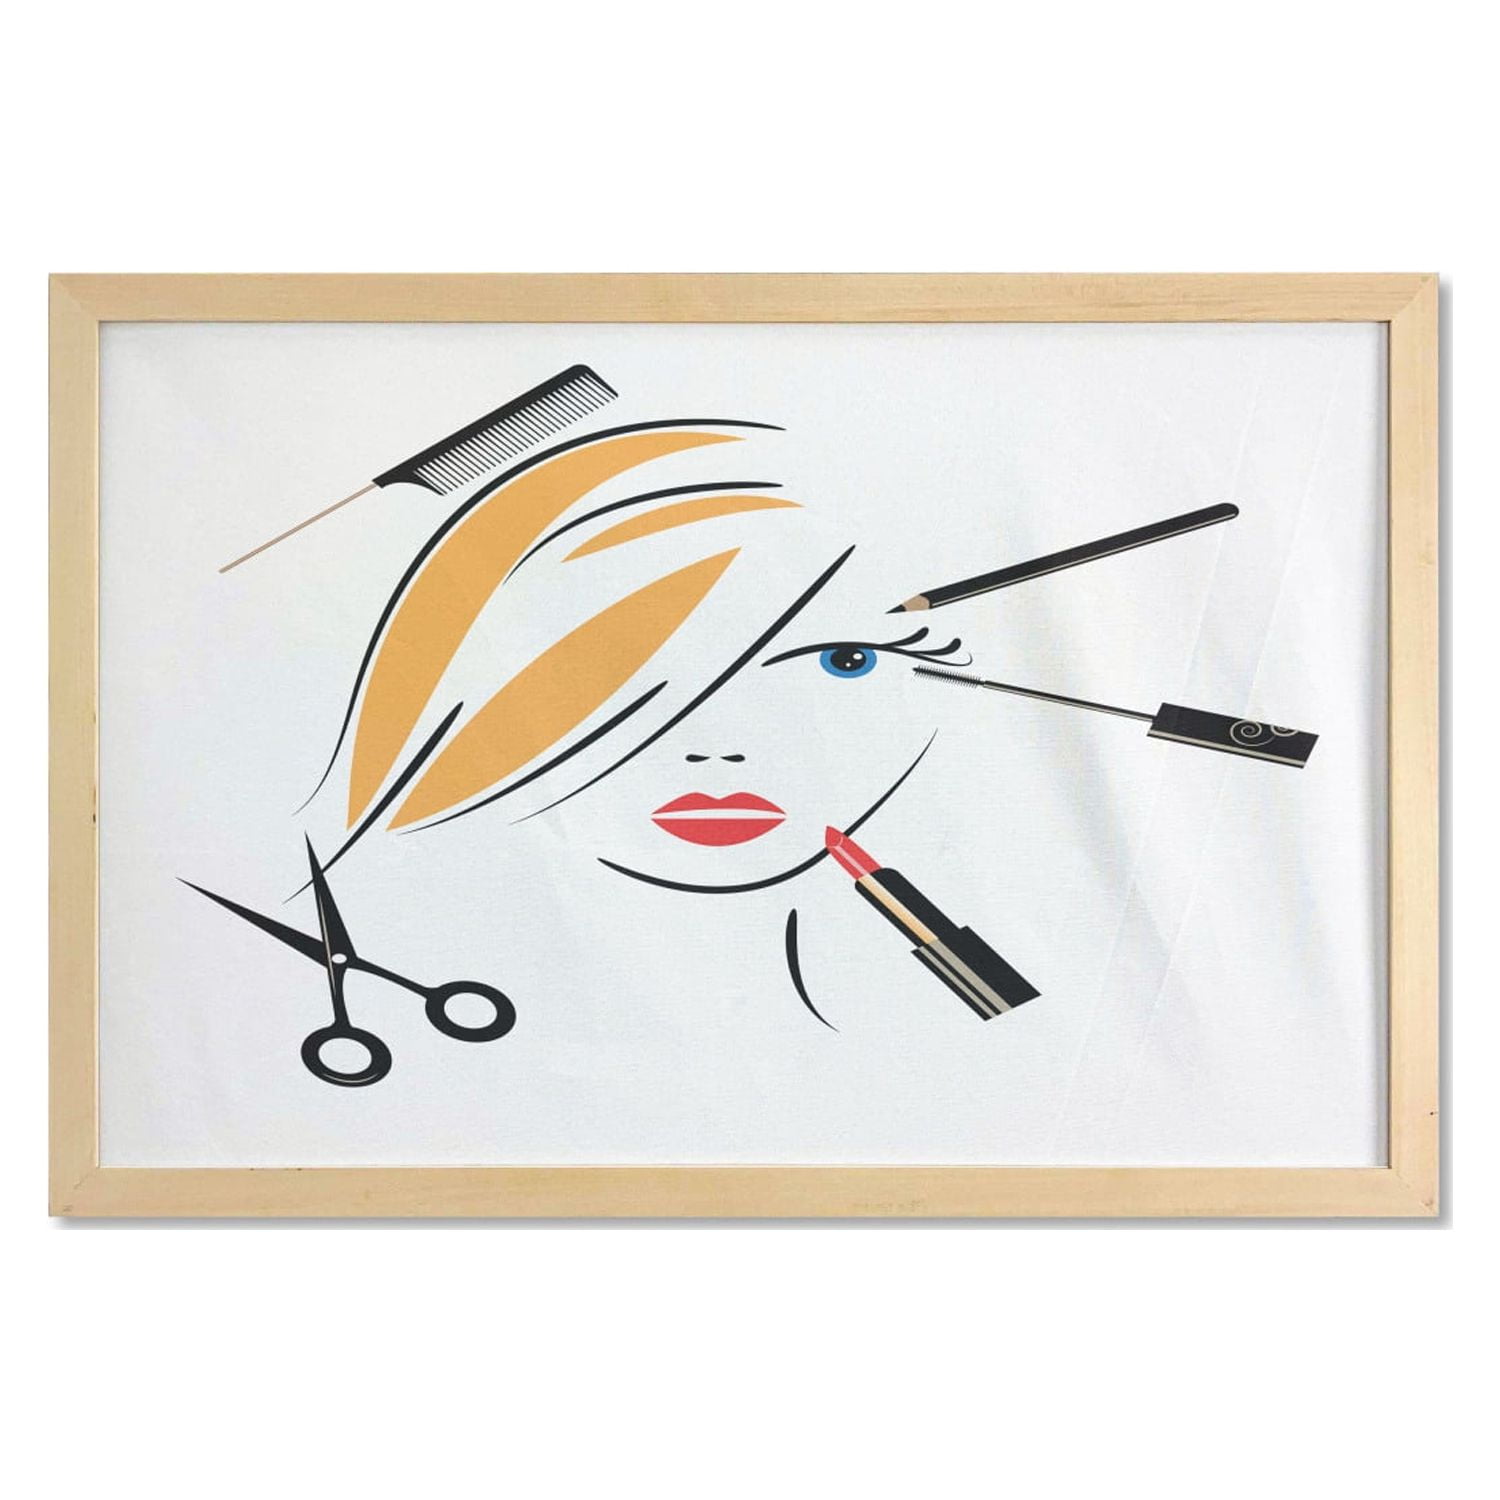 Haircutting Shears Watercolor Print, Hair Salon Art, Scissors Print,  Watercolor Art, Illustration, Home Decor, Wall Art, Scissors Poster 